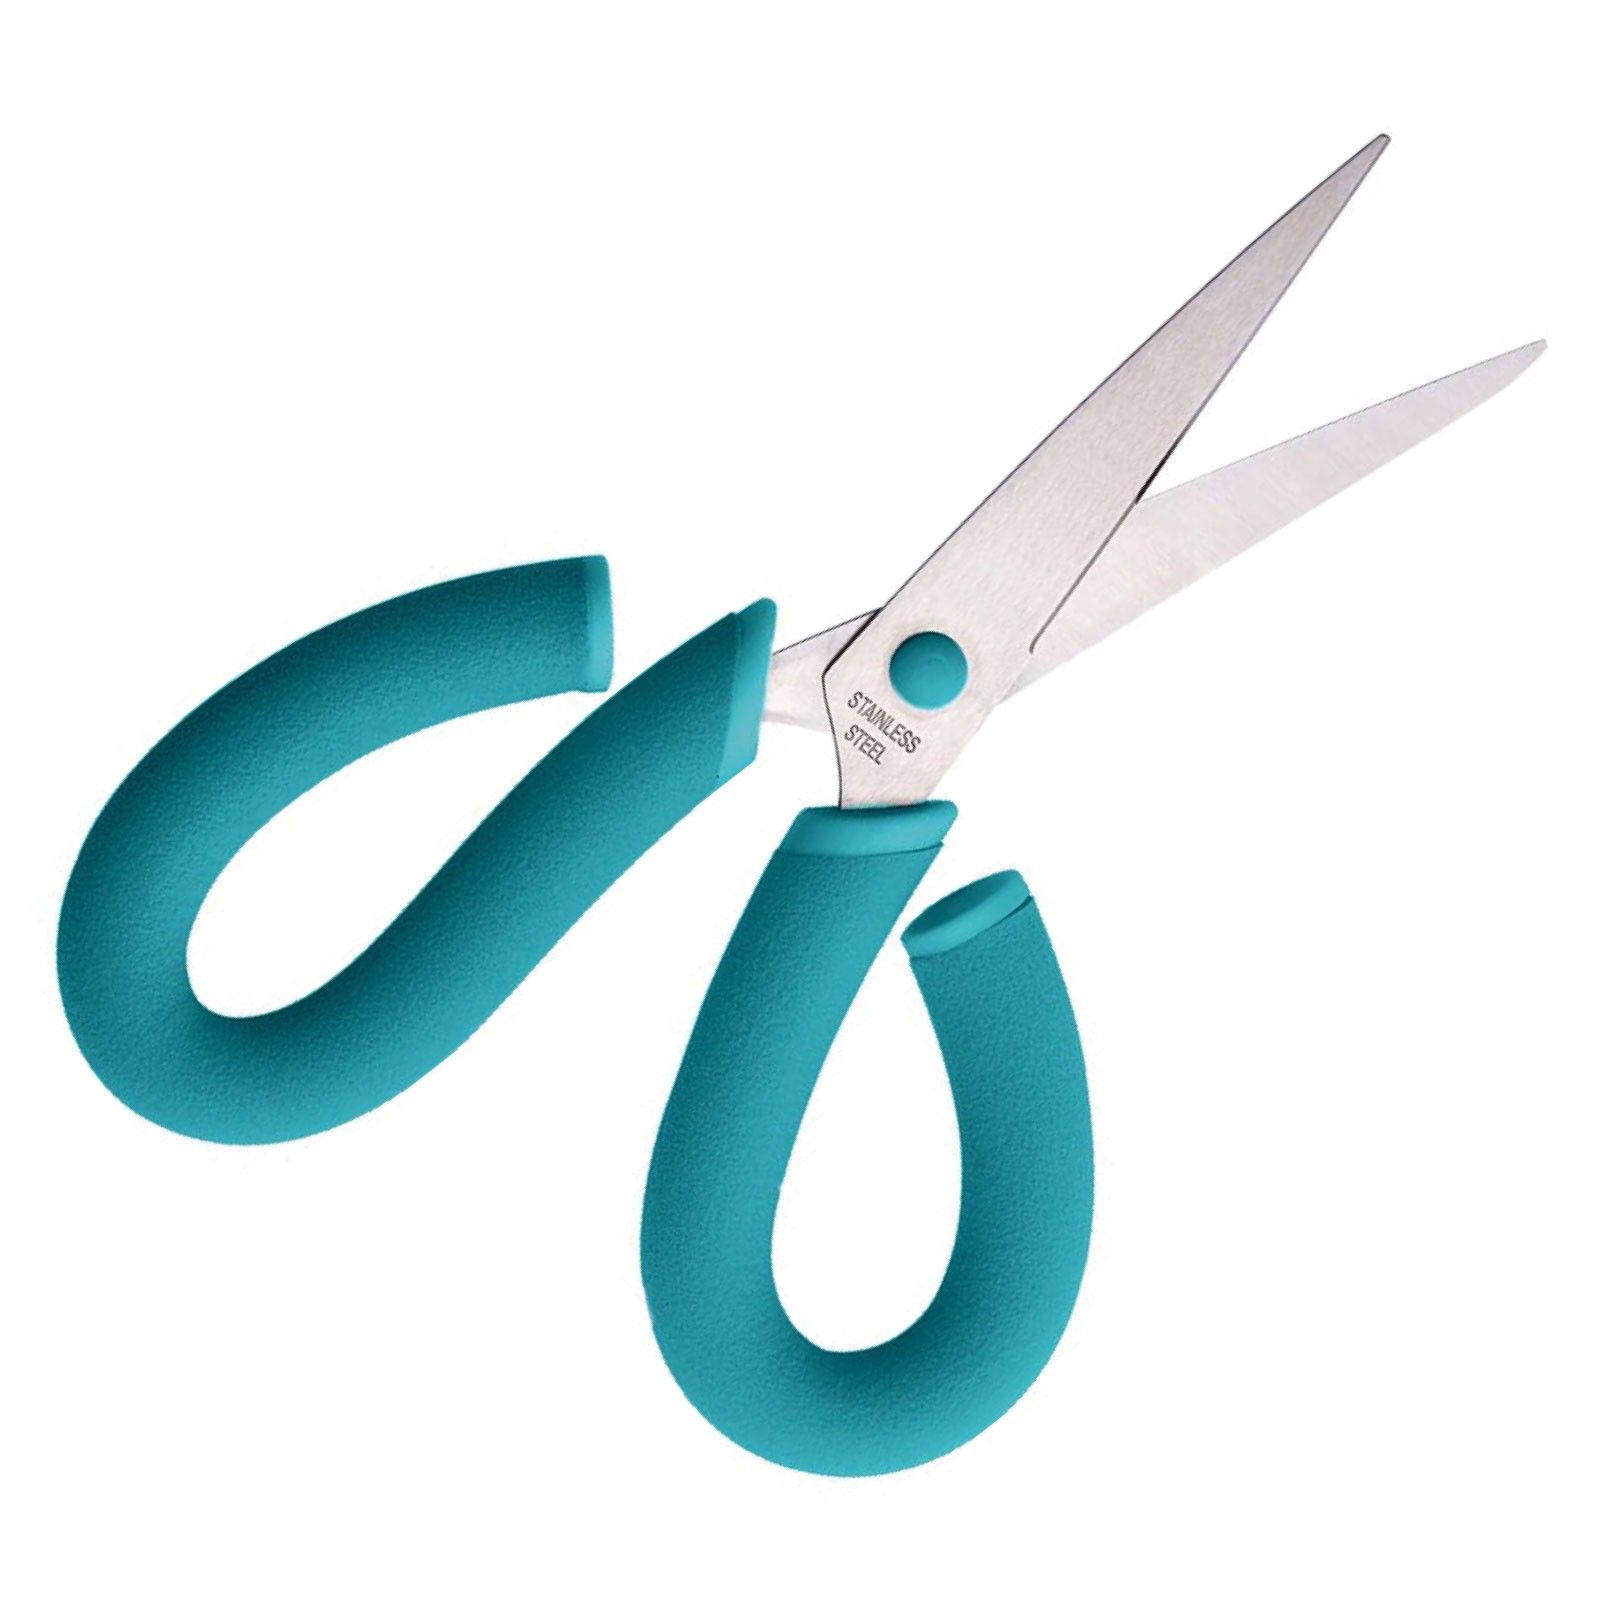 We R Makers • Comfort craft Soft grip scissors 20,32cm blades